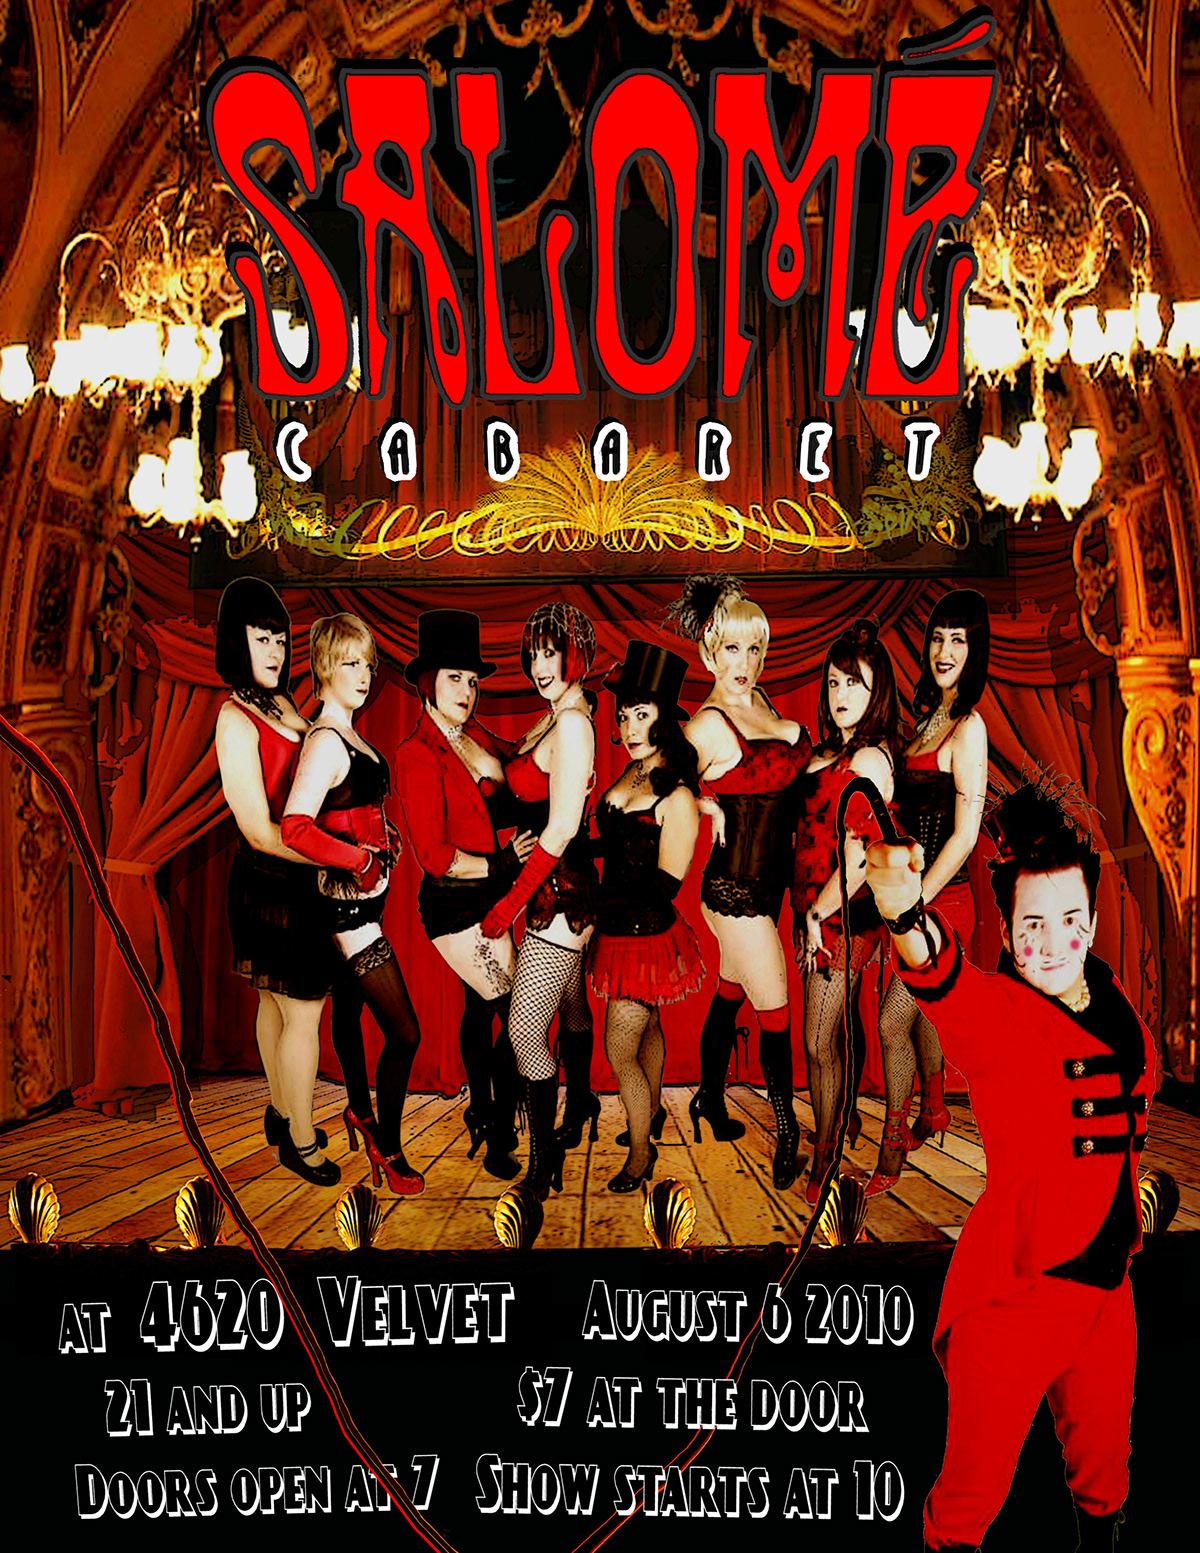 Salome cabaret Burlesque troupe poster